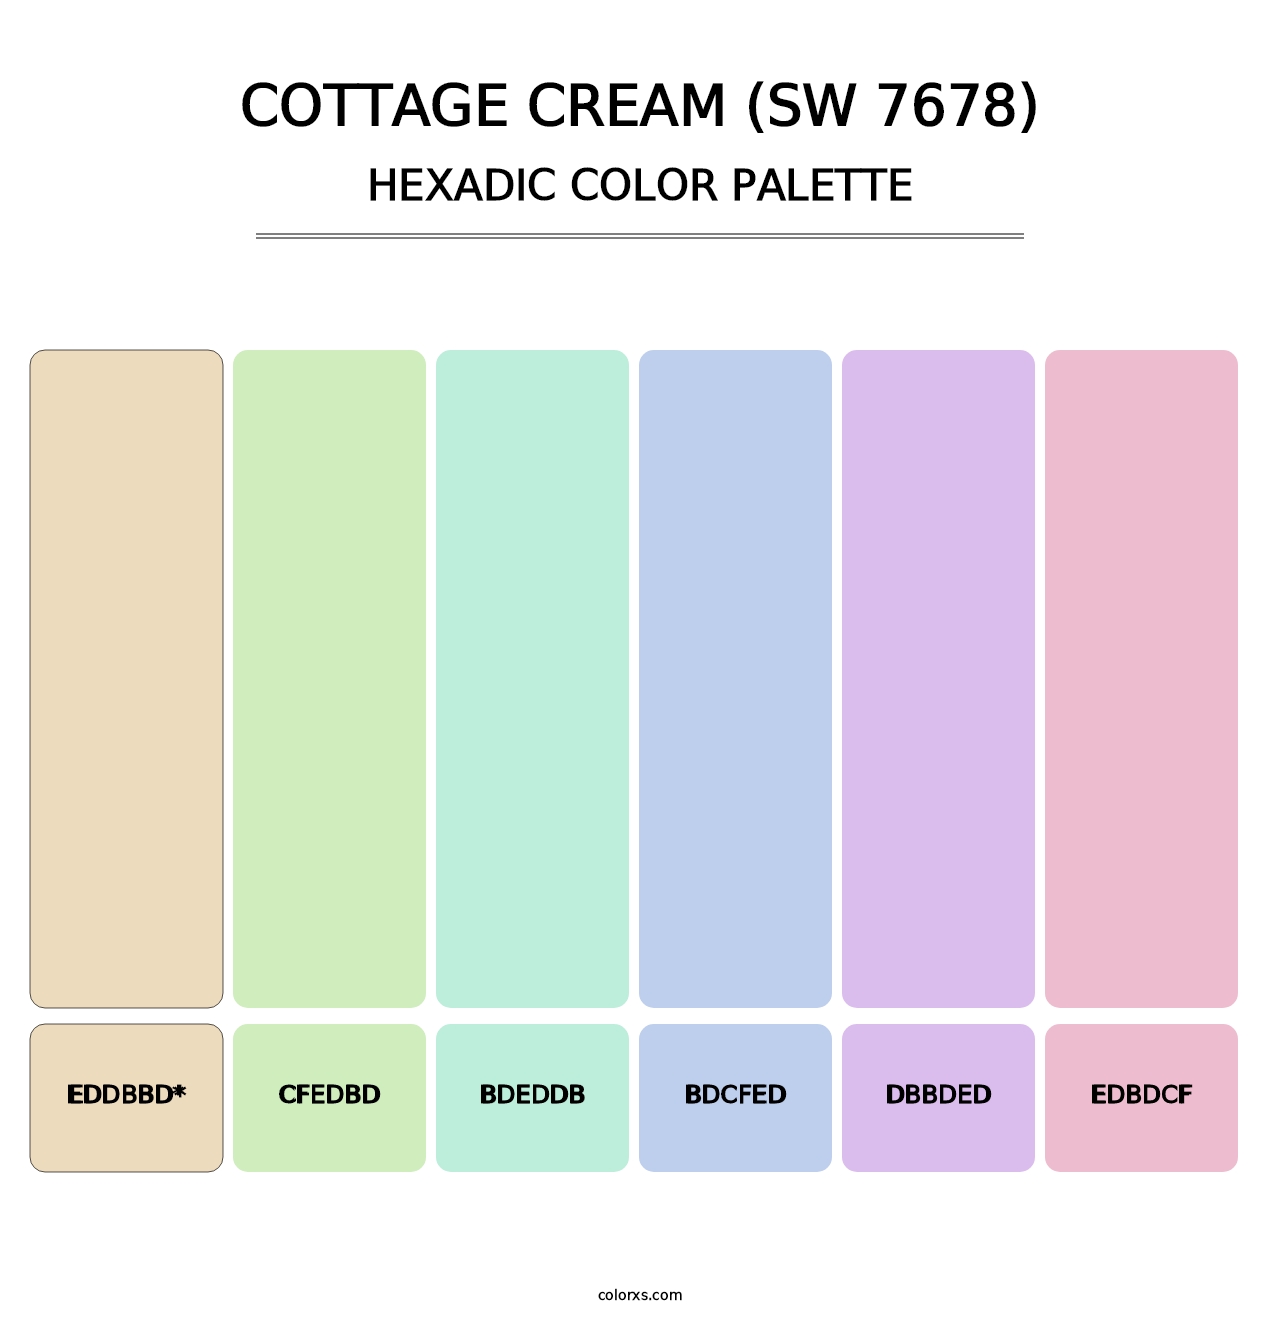 Cottage Cream (SW 7678) - Hexadic Color Palette